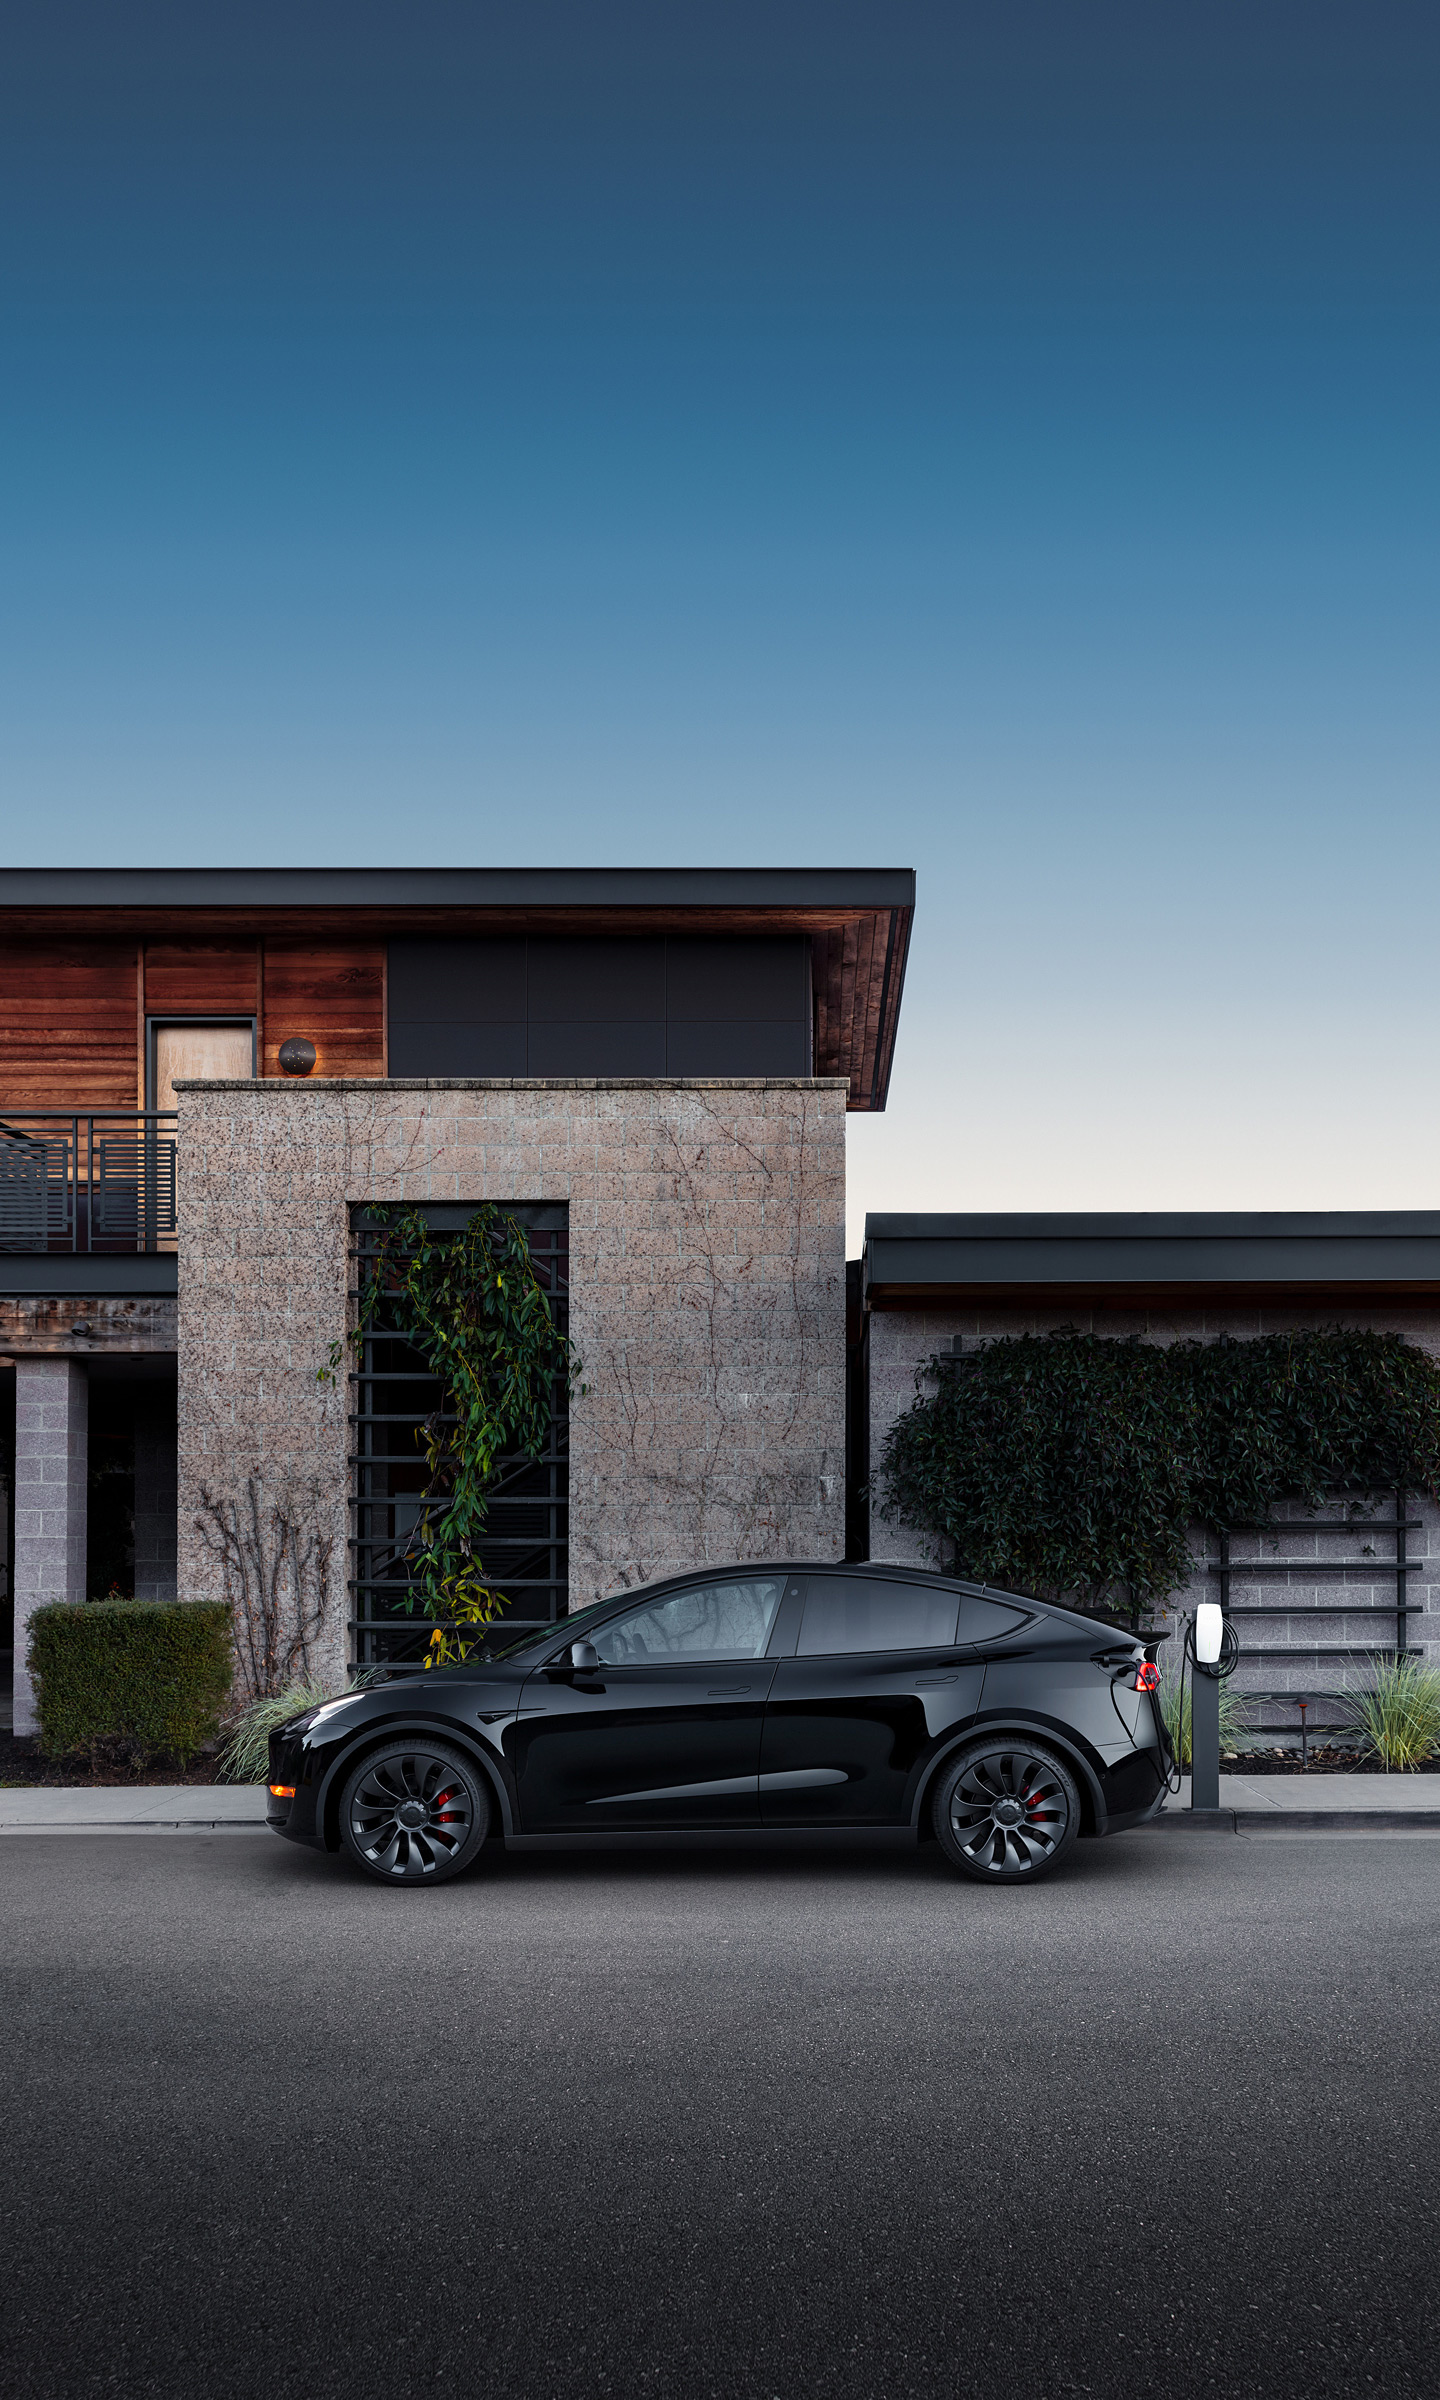  2021 Tesla Model Y Wallpaper.